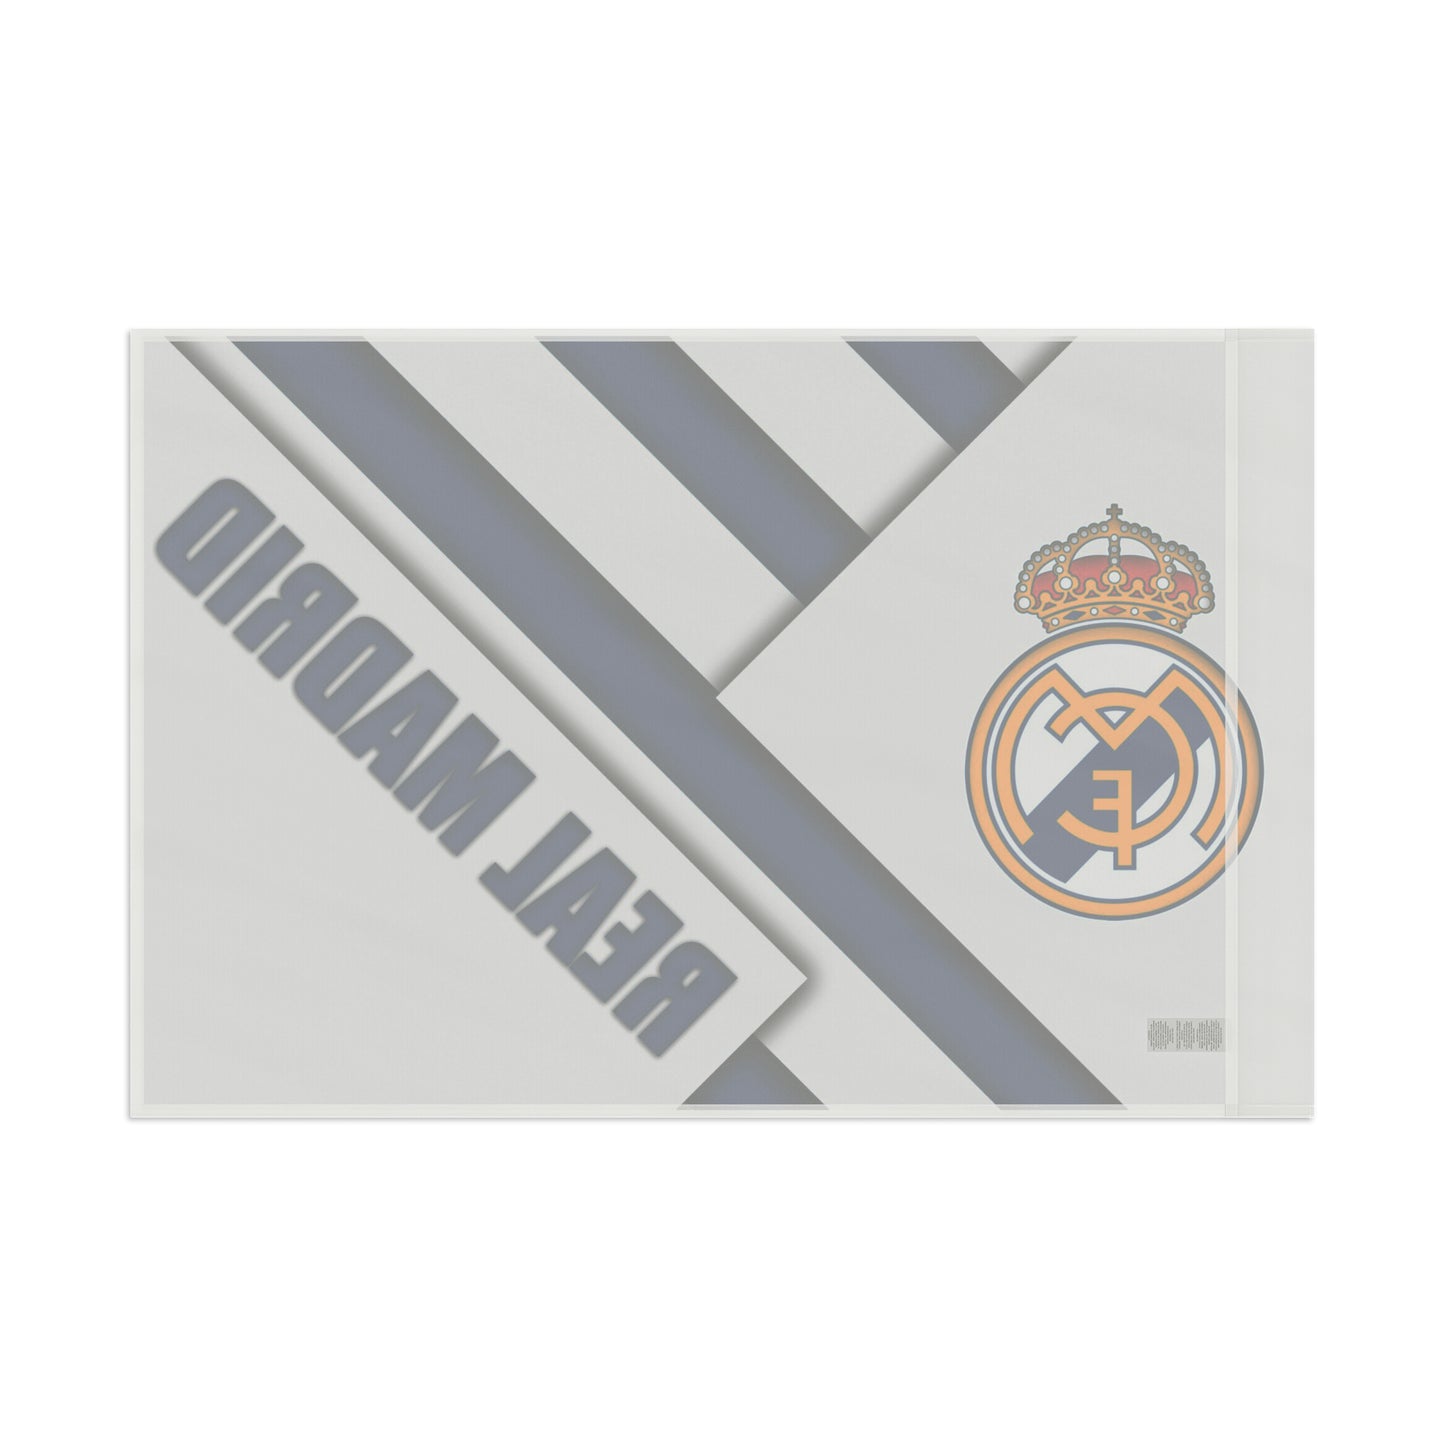 Real Madrid Futbol soccer World Champions High Definition Print Flag